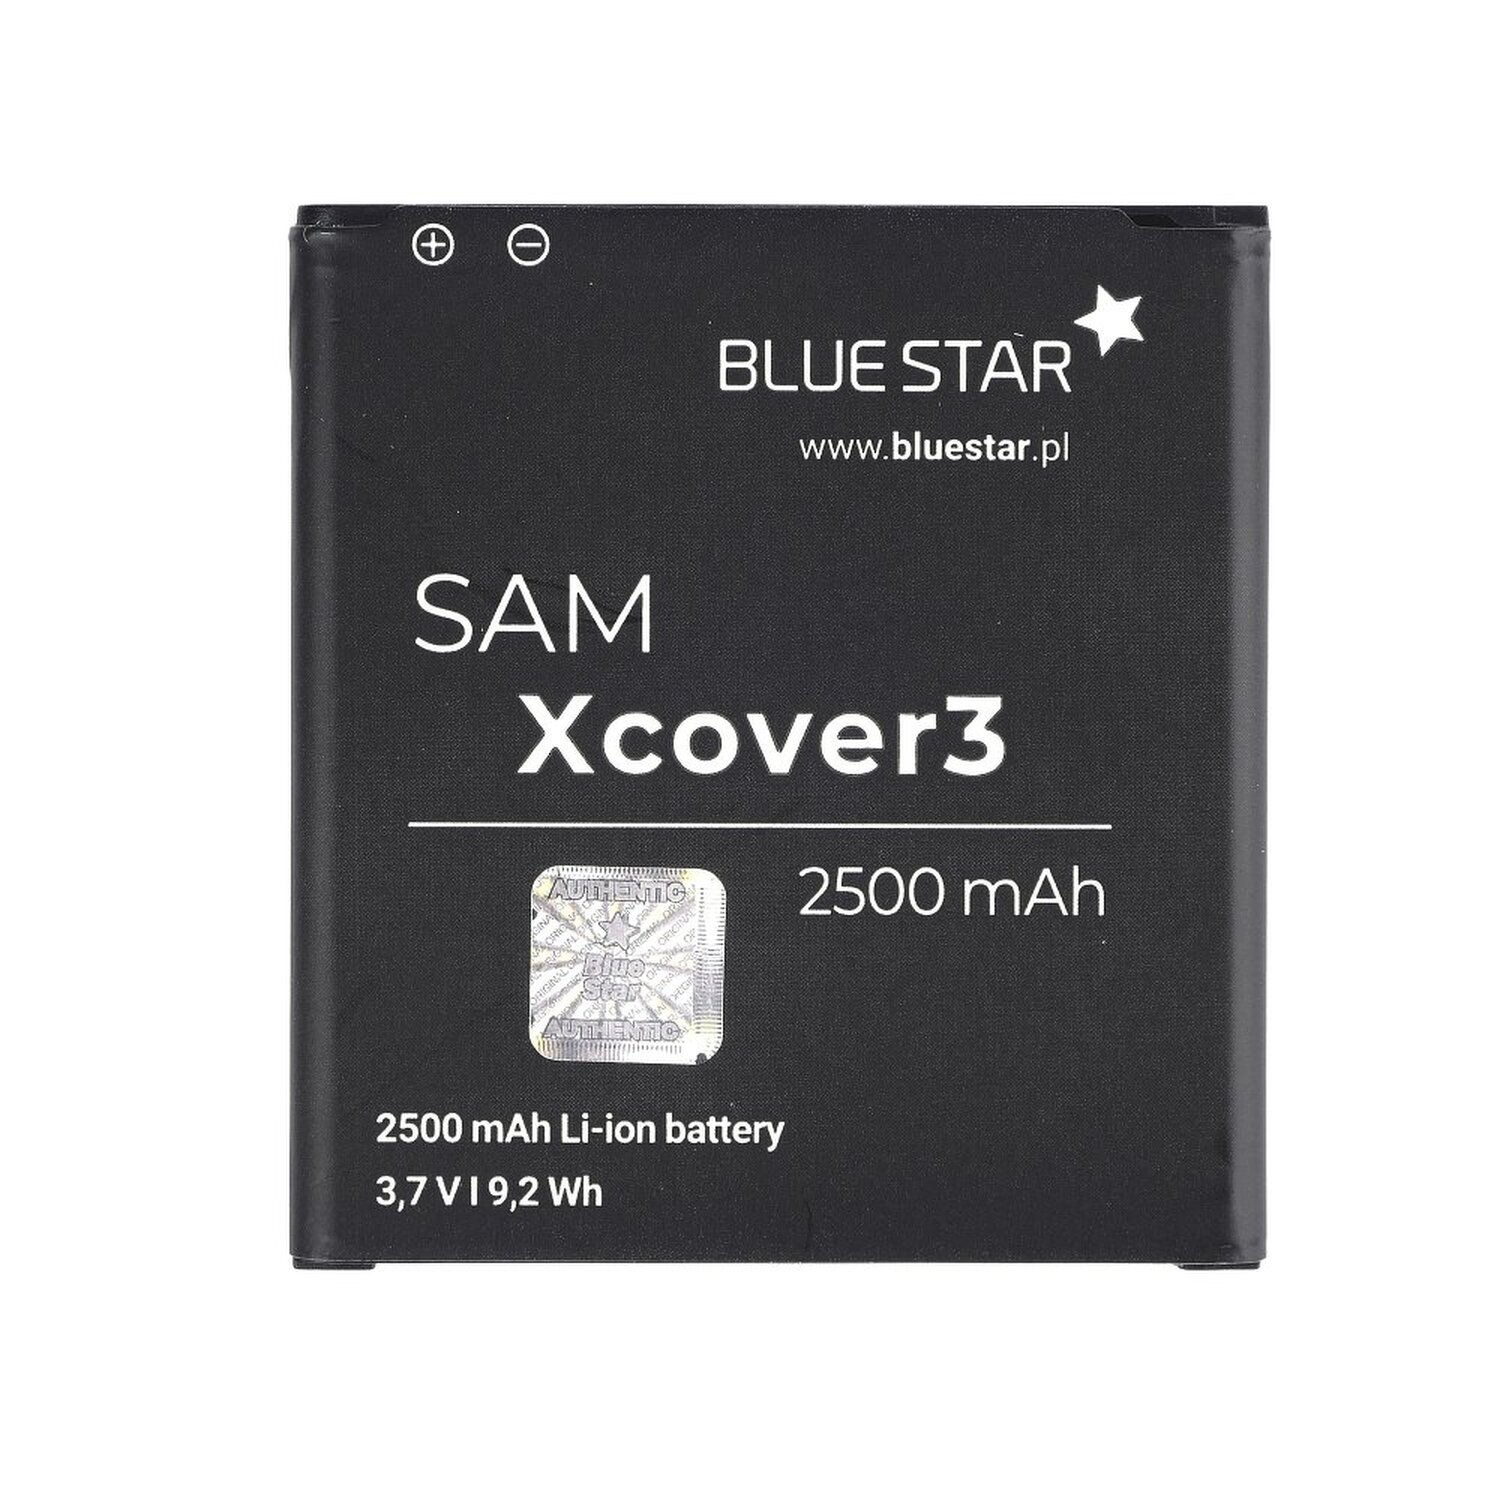 Xcover Li-Ion 3 Akku Handyakku Galaxy für BLUESTAR Samsung